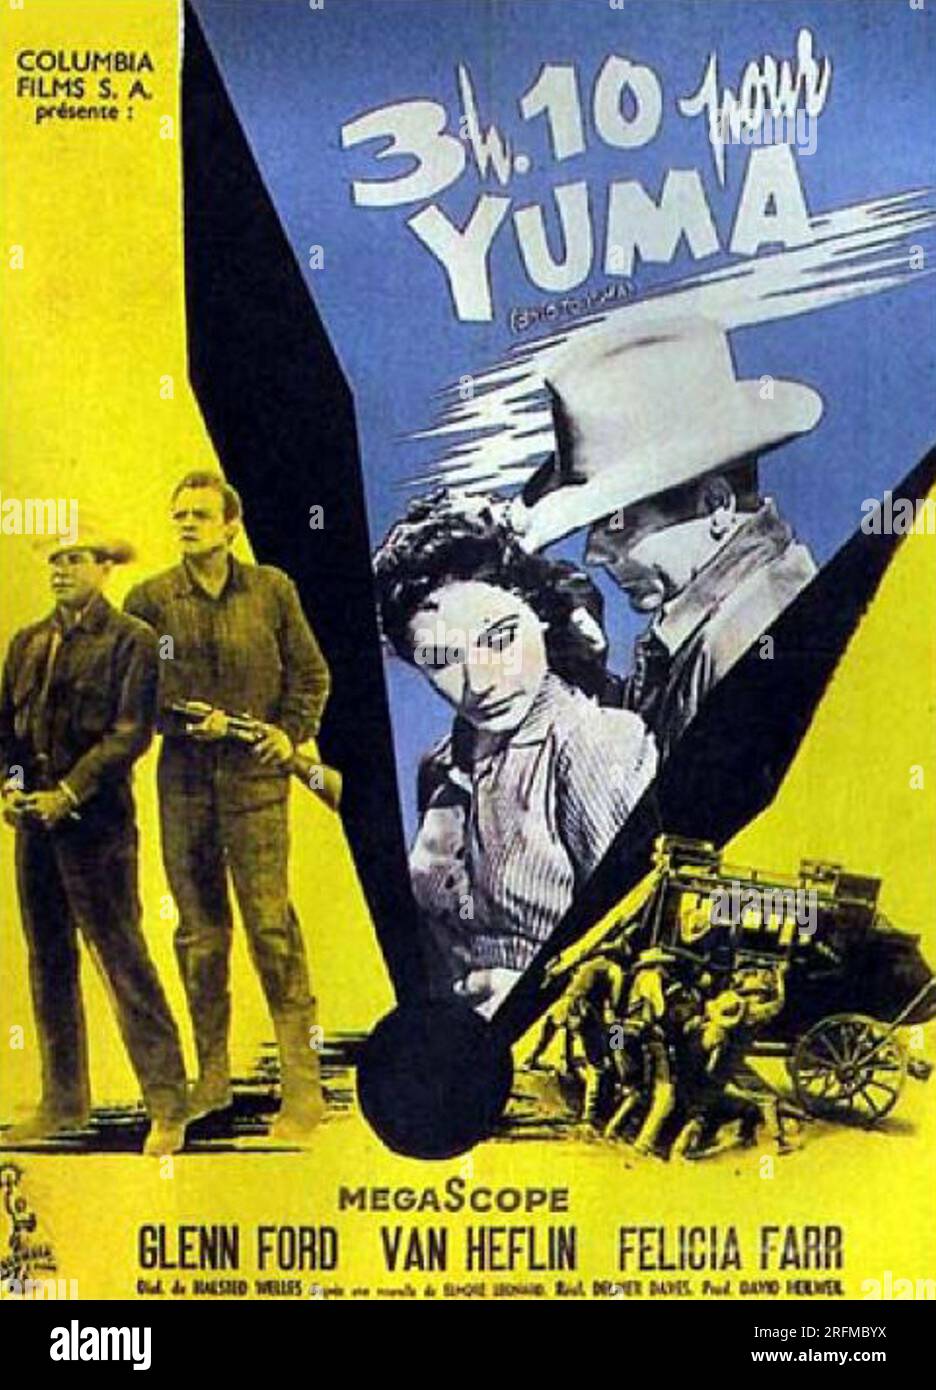 3:10 to Yuma' avec Glen Ford, Van Heflin et Felicia Farr un WESTERN américain de 1957. Banque D'Images